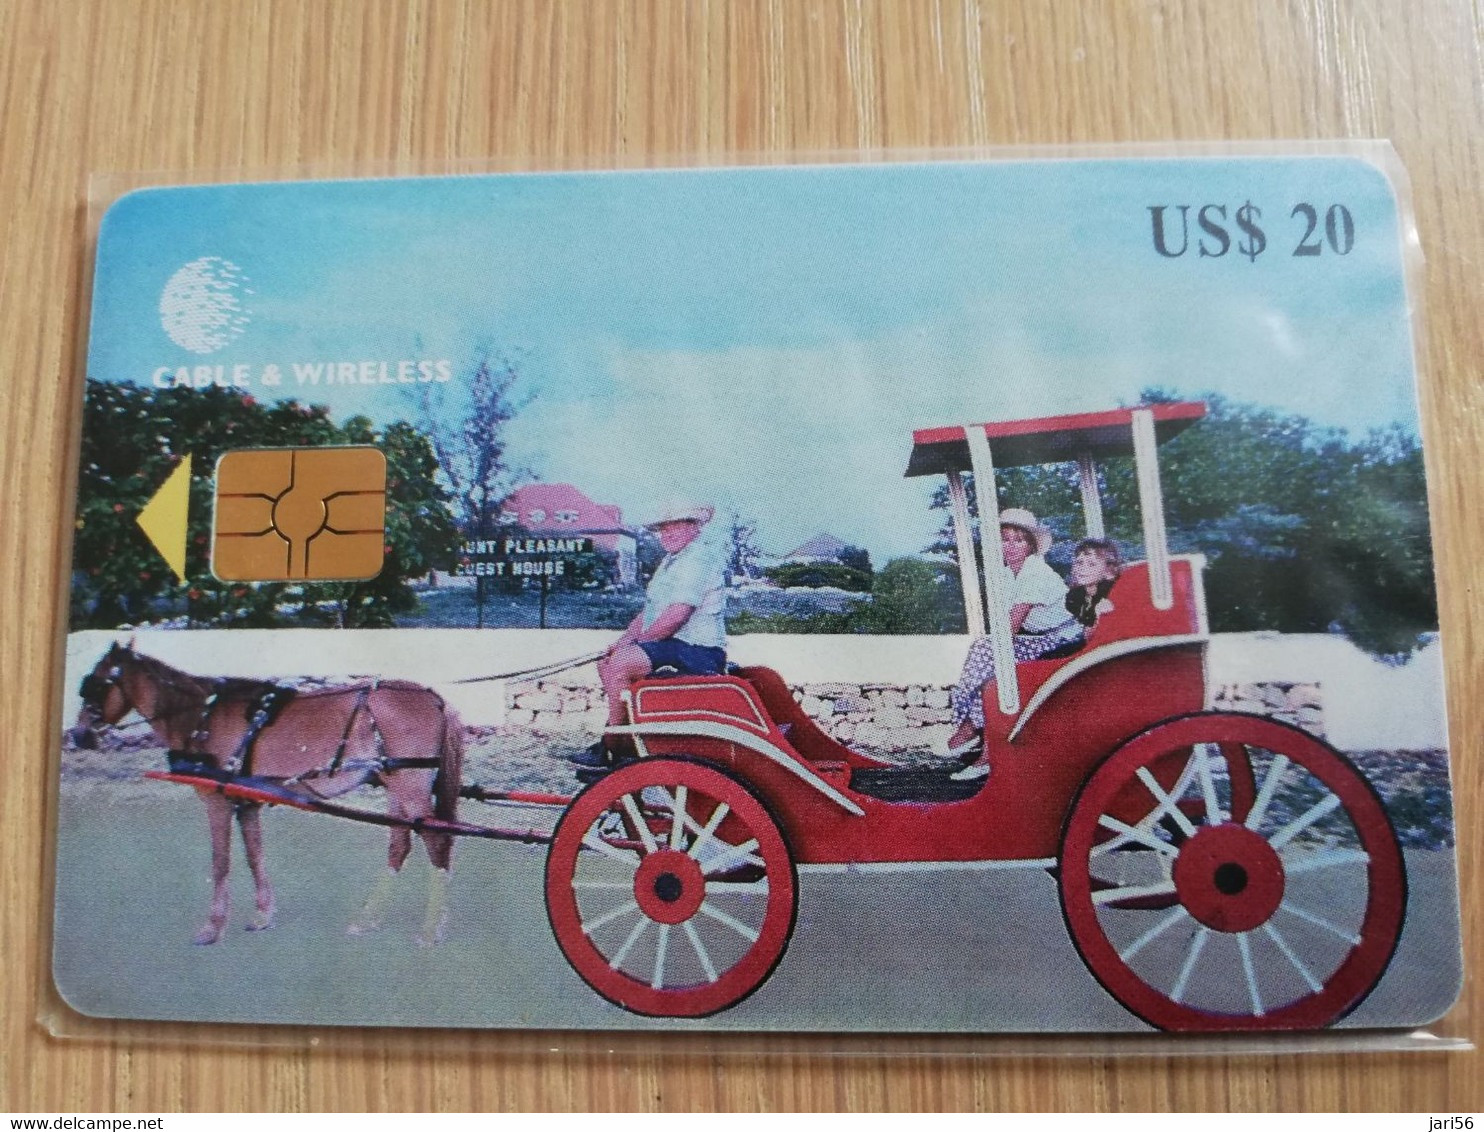 TURKS & CAICOS ISLANDS $ 20,00  CHIP  CARD  HORSE CART WITH LOGO     T&C -C3  GEM6     Fine Used  Card  **3317** - Turks & Caicos (Islands)